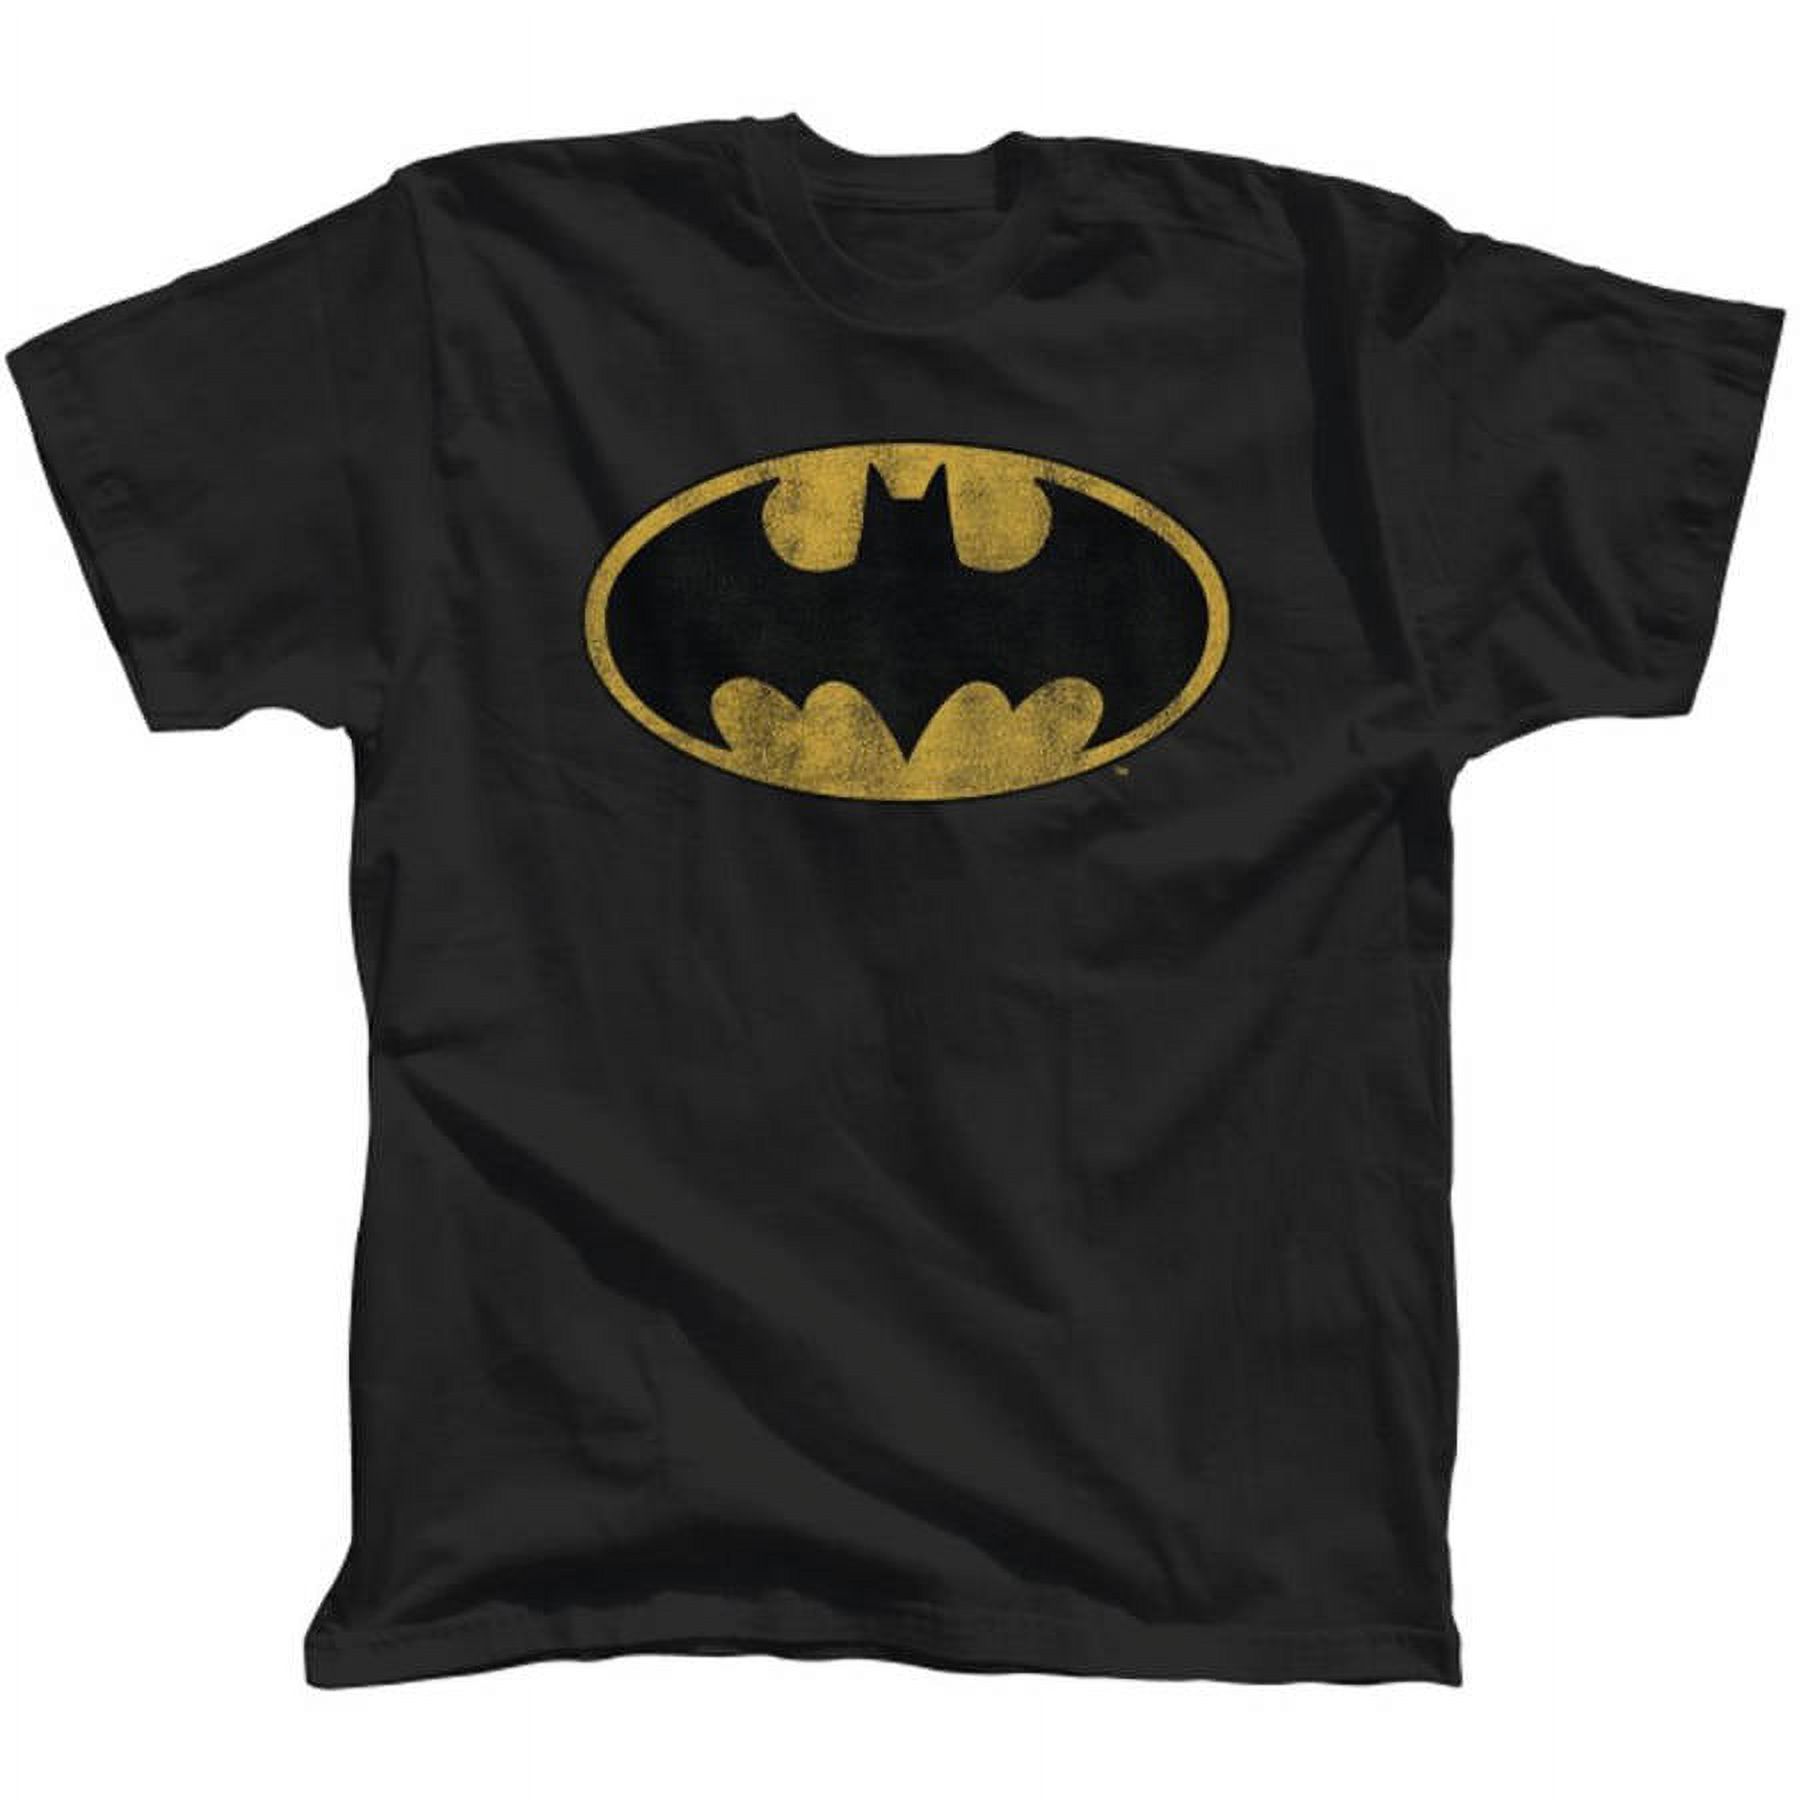 Batman distressed logo Men's tee shirt - image 1 of 4